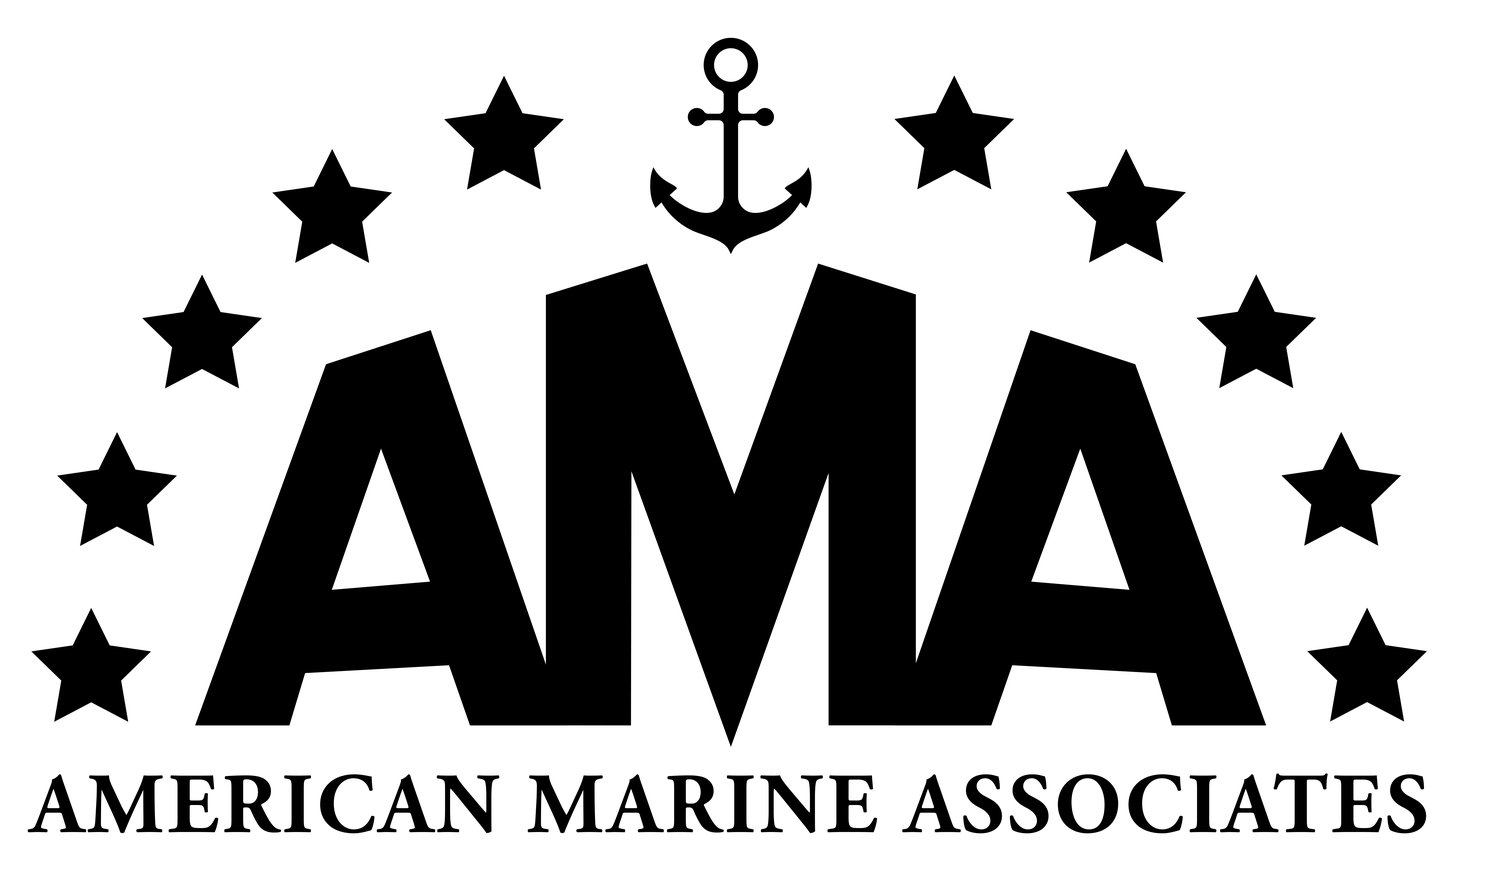 American Marine Associates, LLC